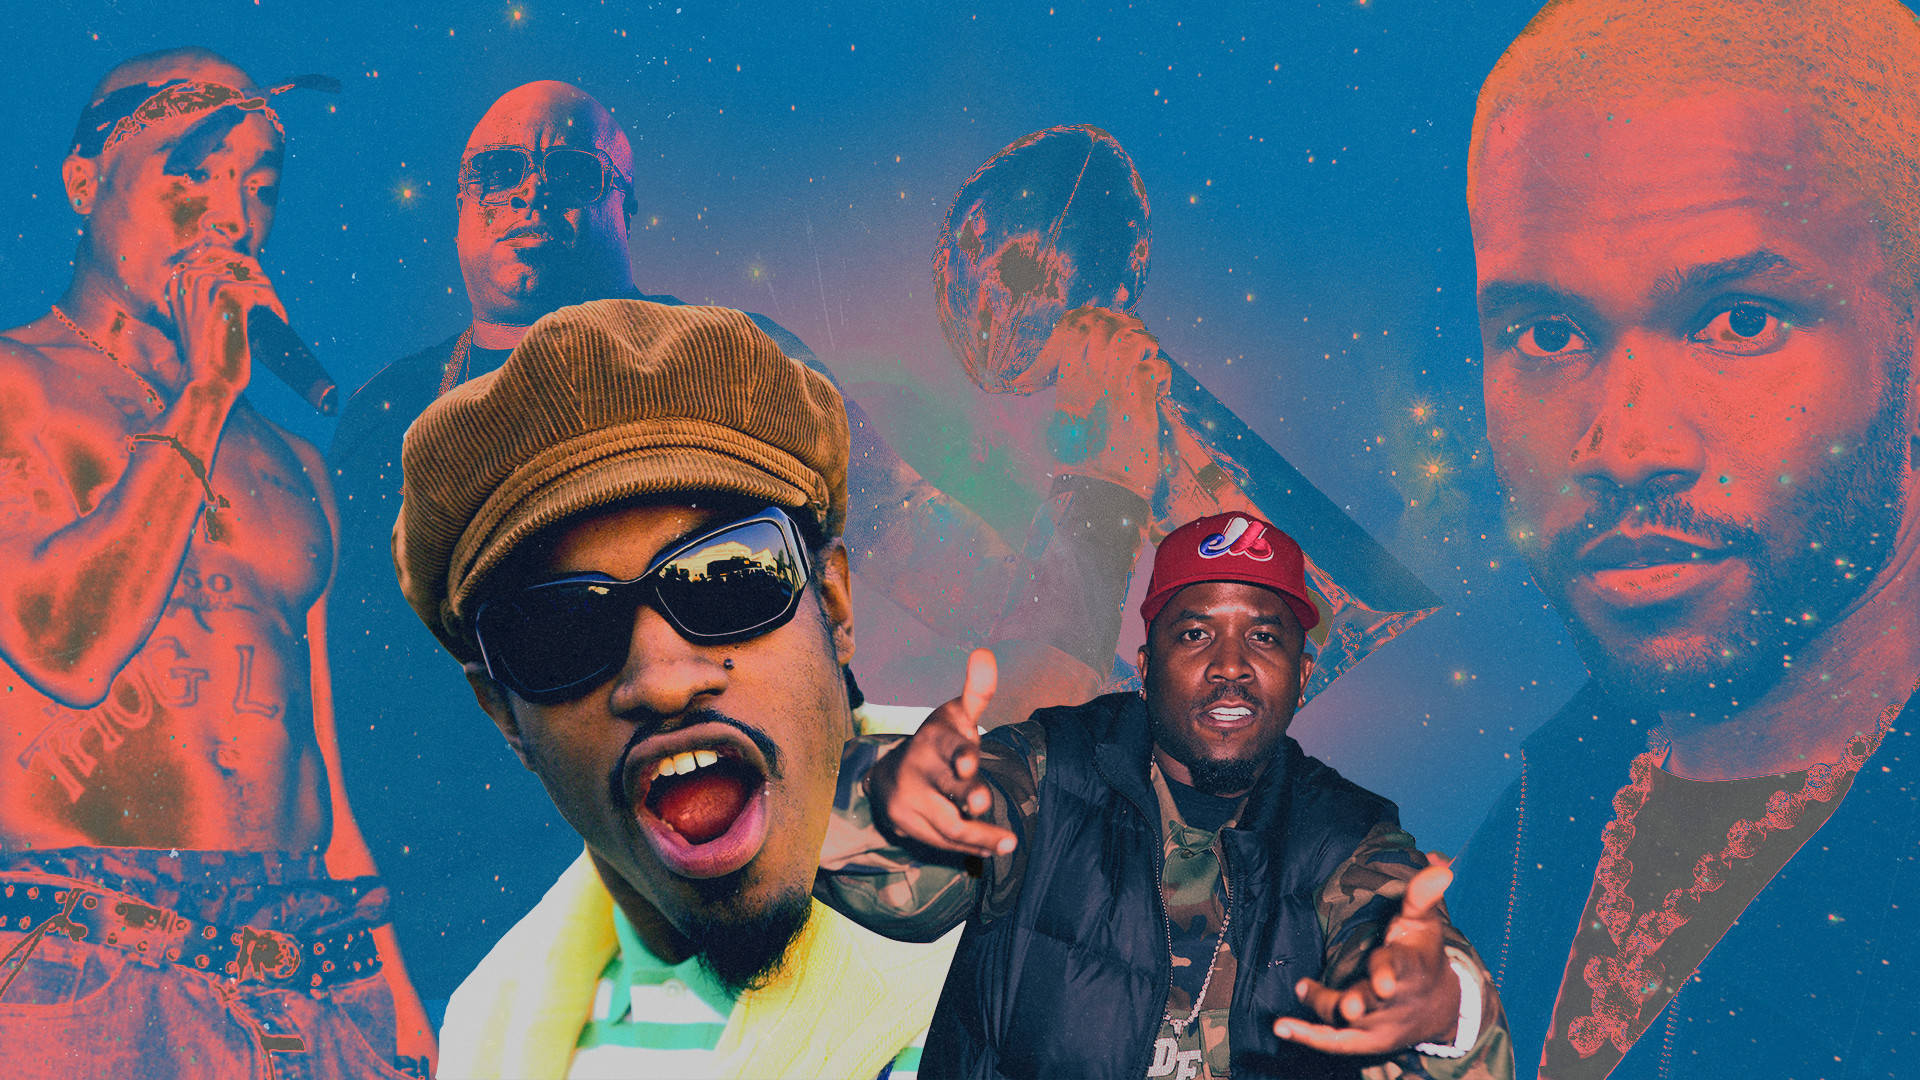 100+] Cool Rap Wallpapers